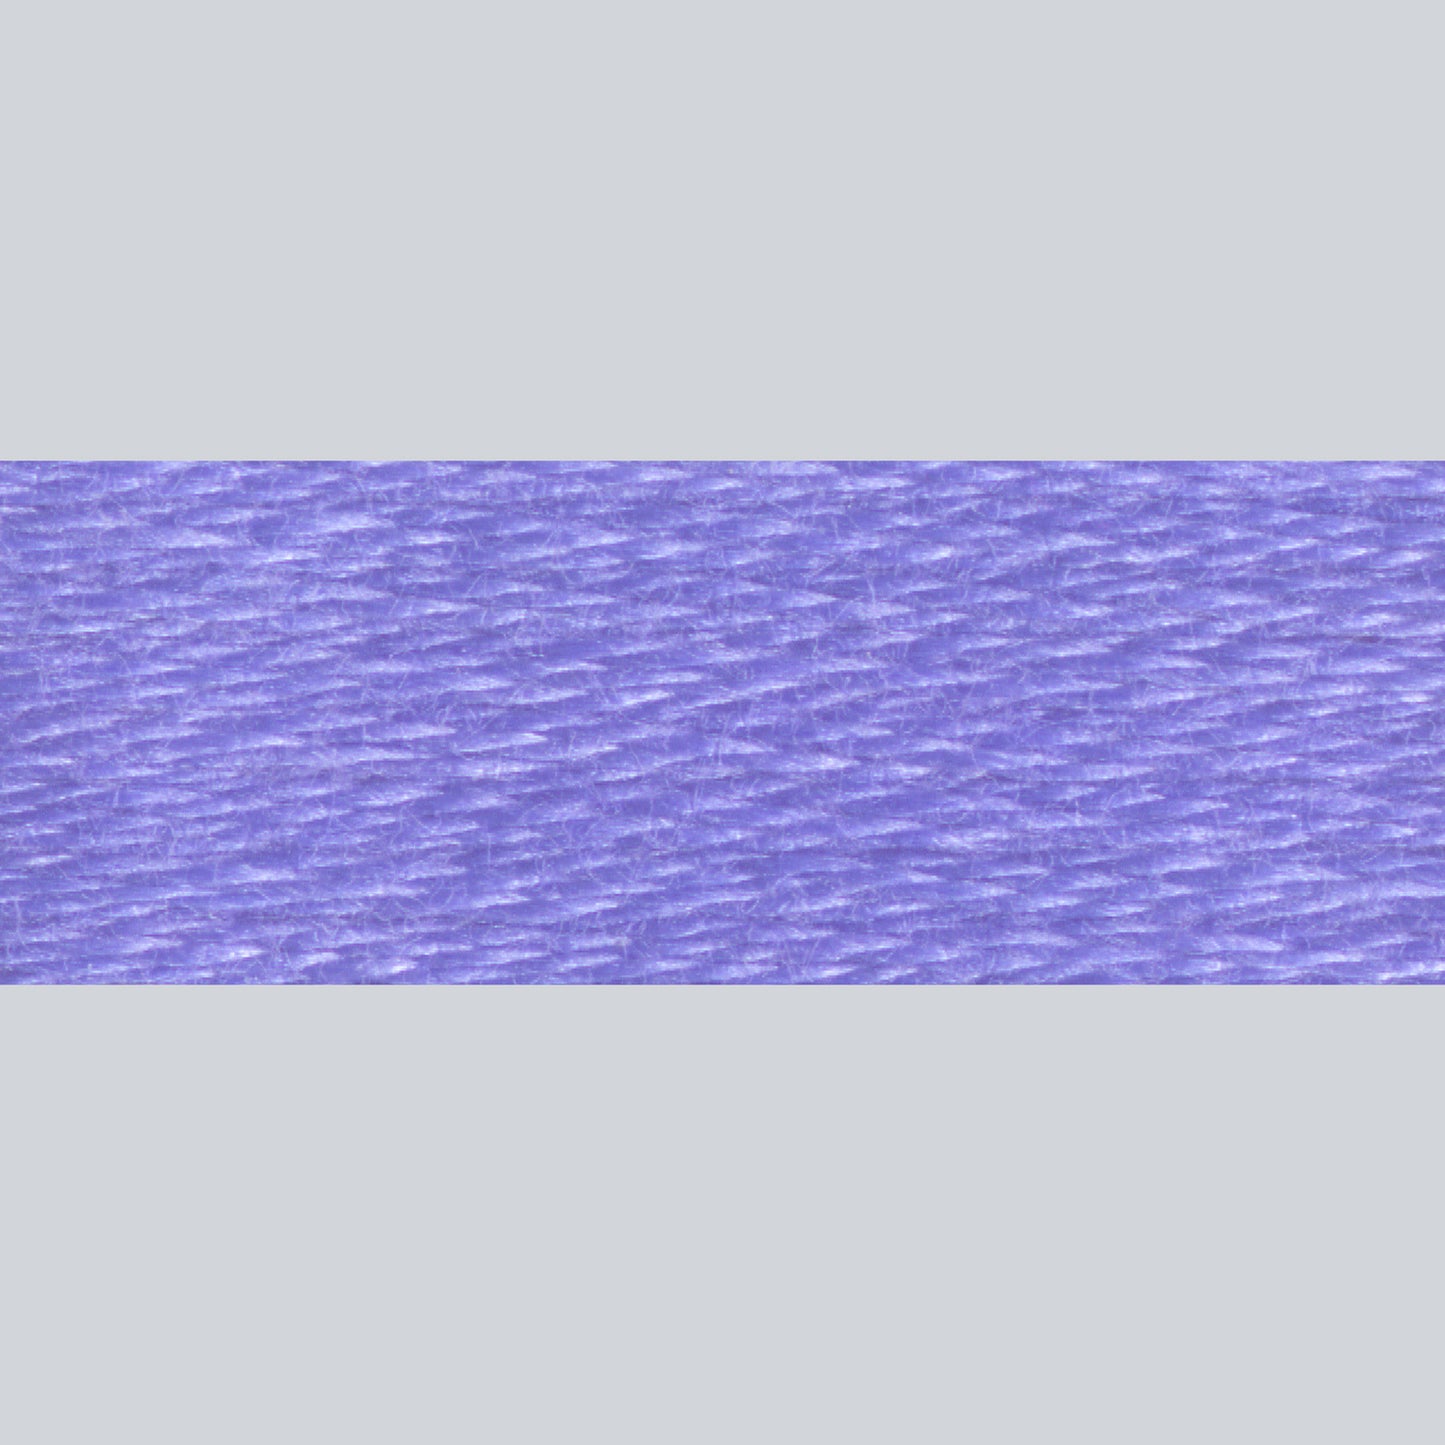 DMC Embroidery Floss - 340 Medium Blue Violet Alternative View #1